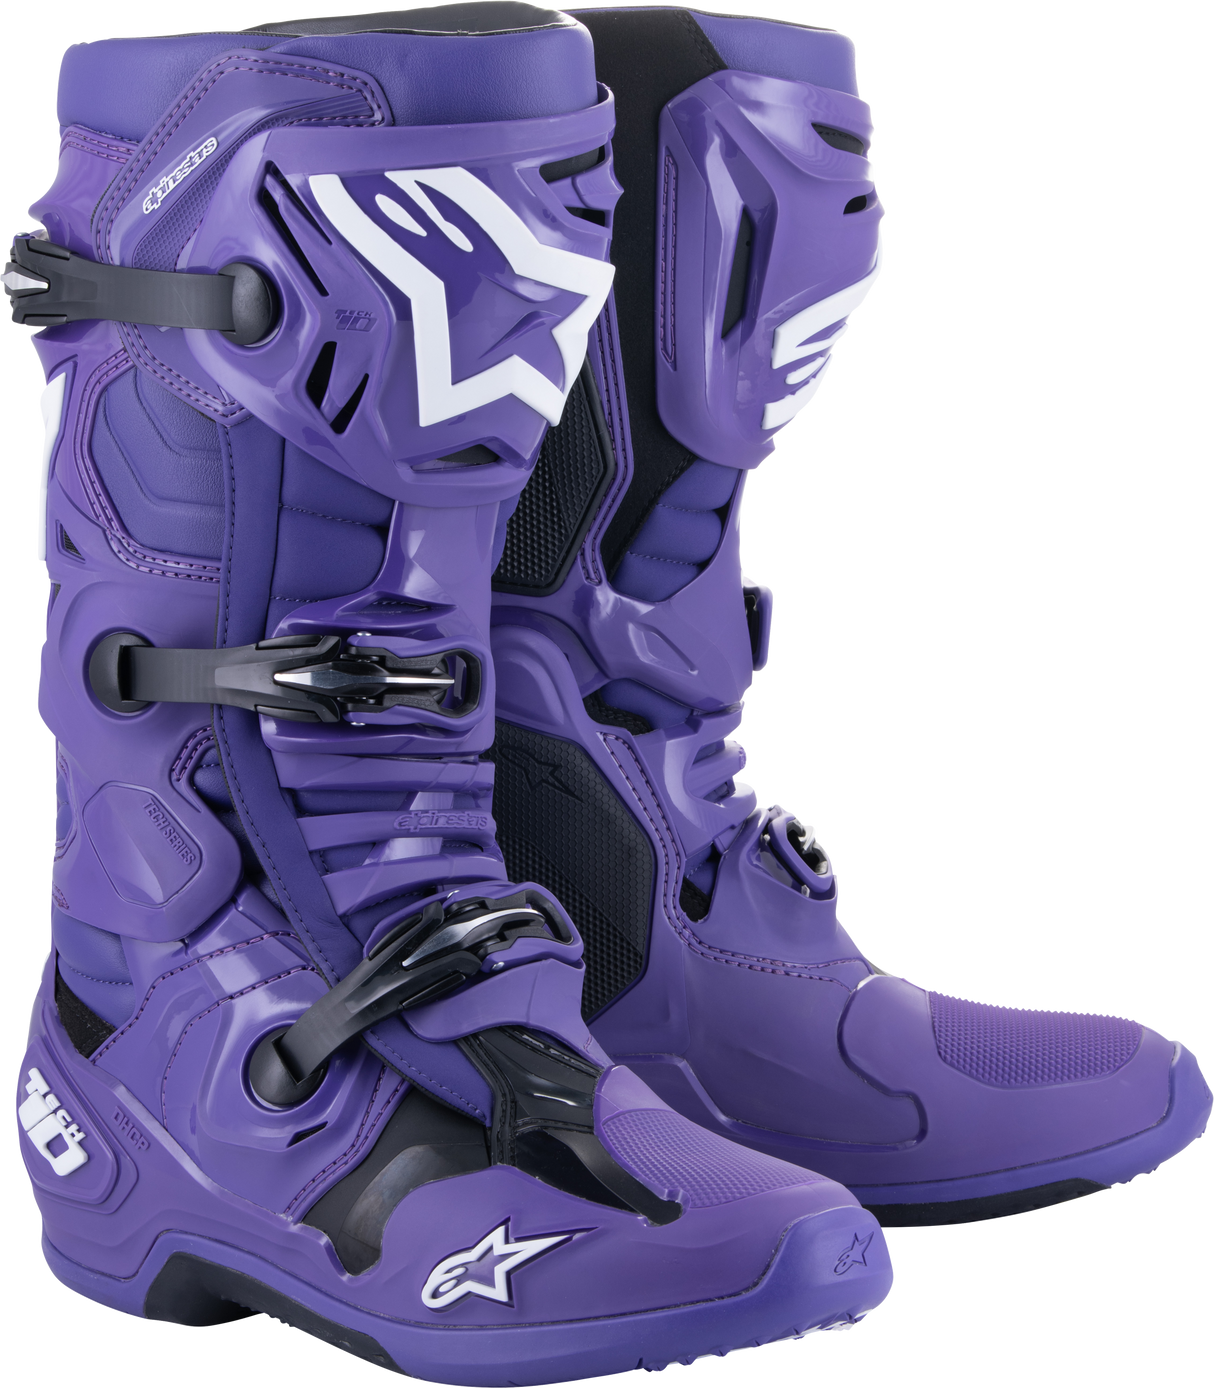 Tech 10 Boots Ultraviolet Black Sz 7